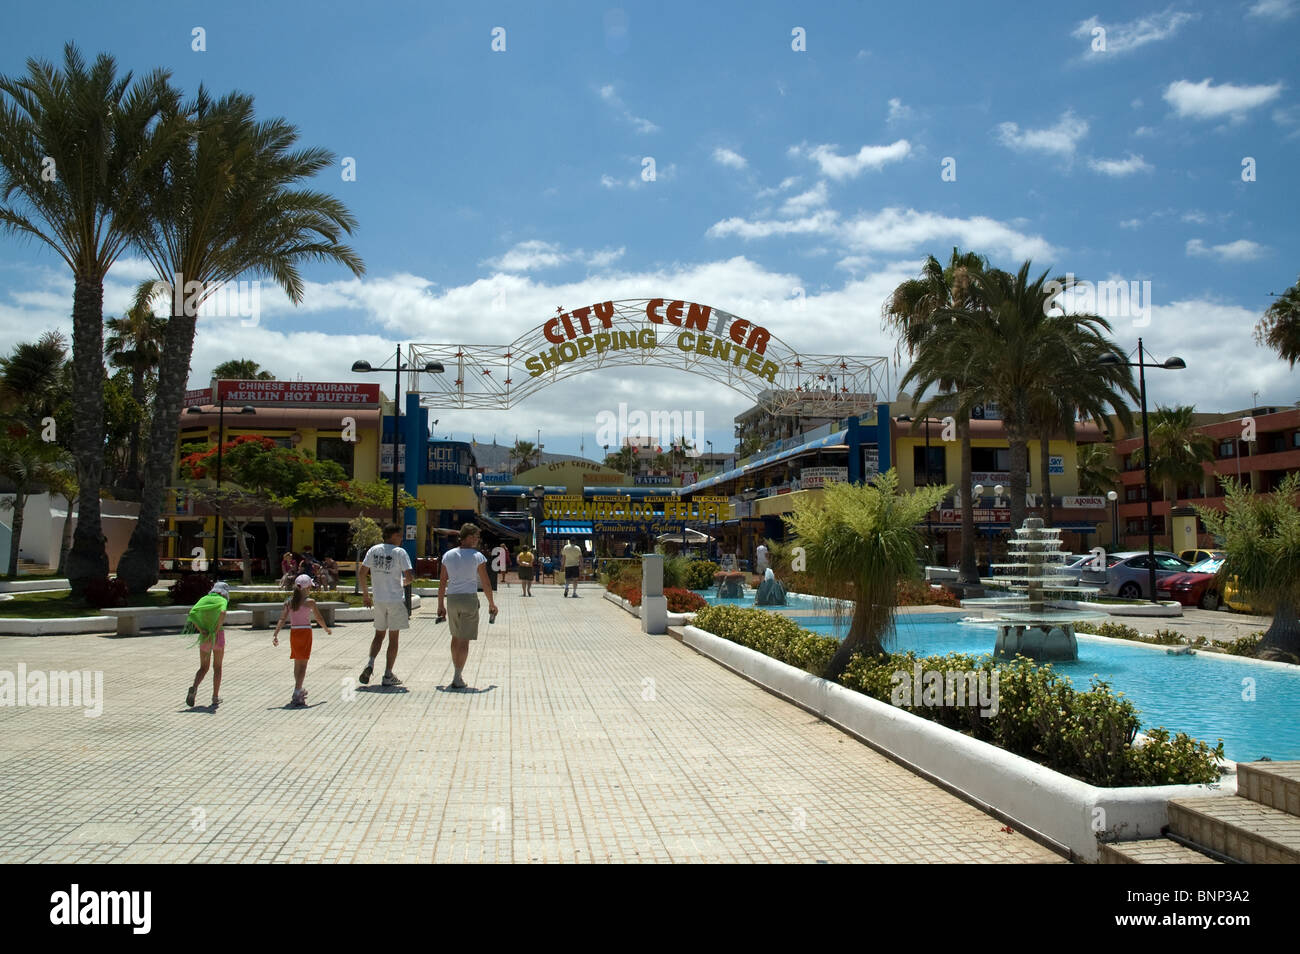 City center Einkaufszentrum Teneriffa - Playa de Las Americas  Stockfotografie - Alamy